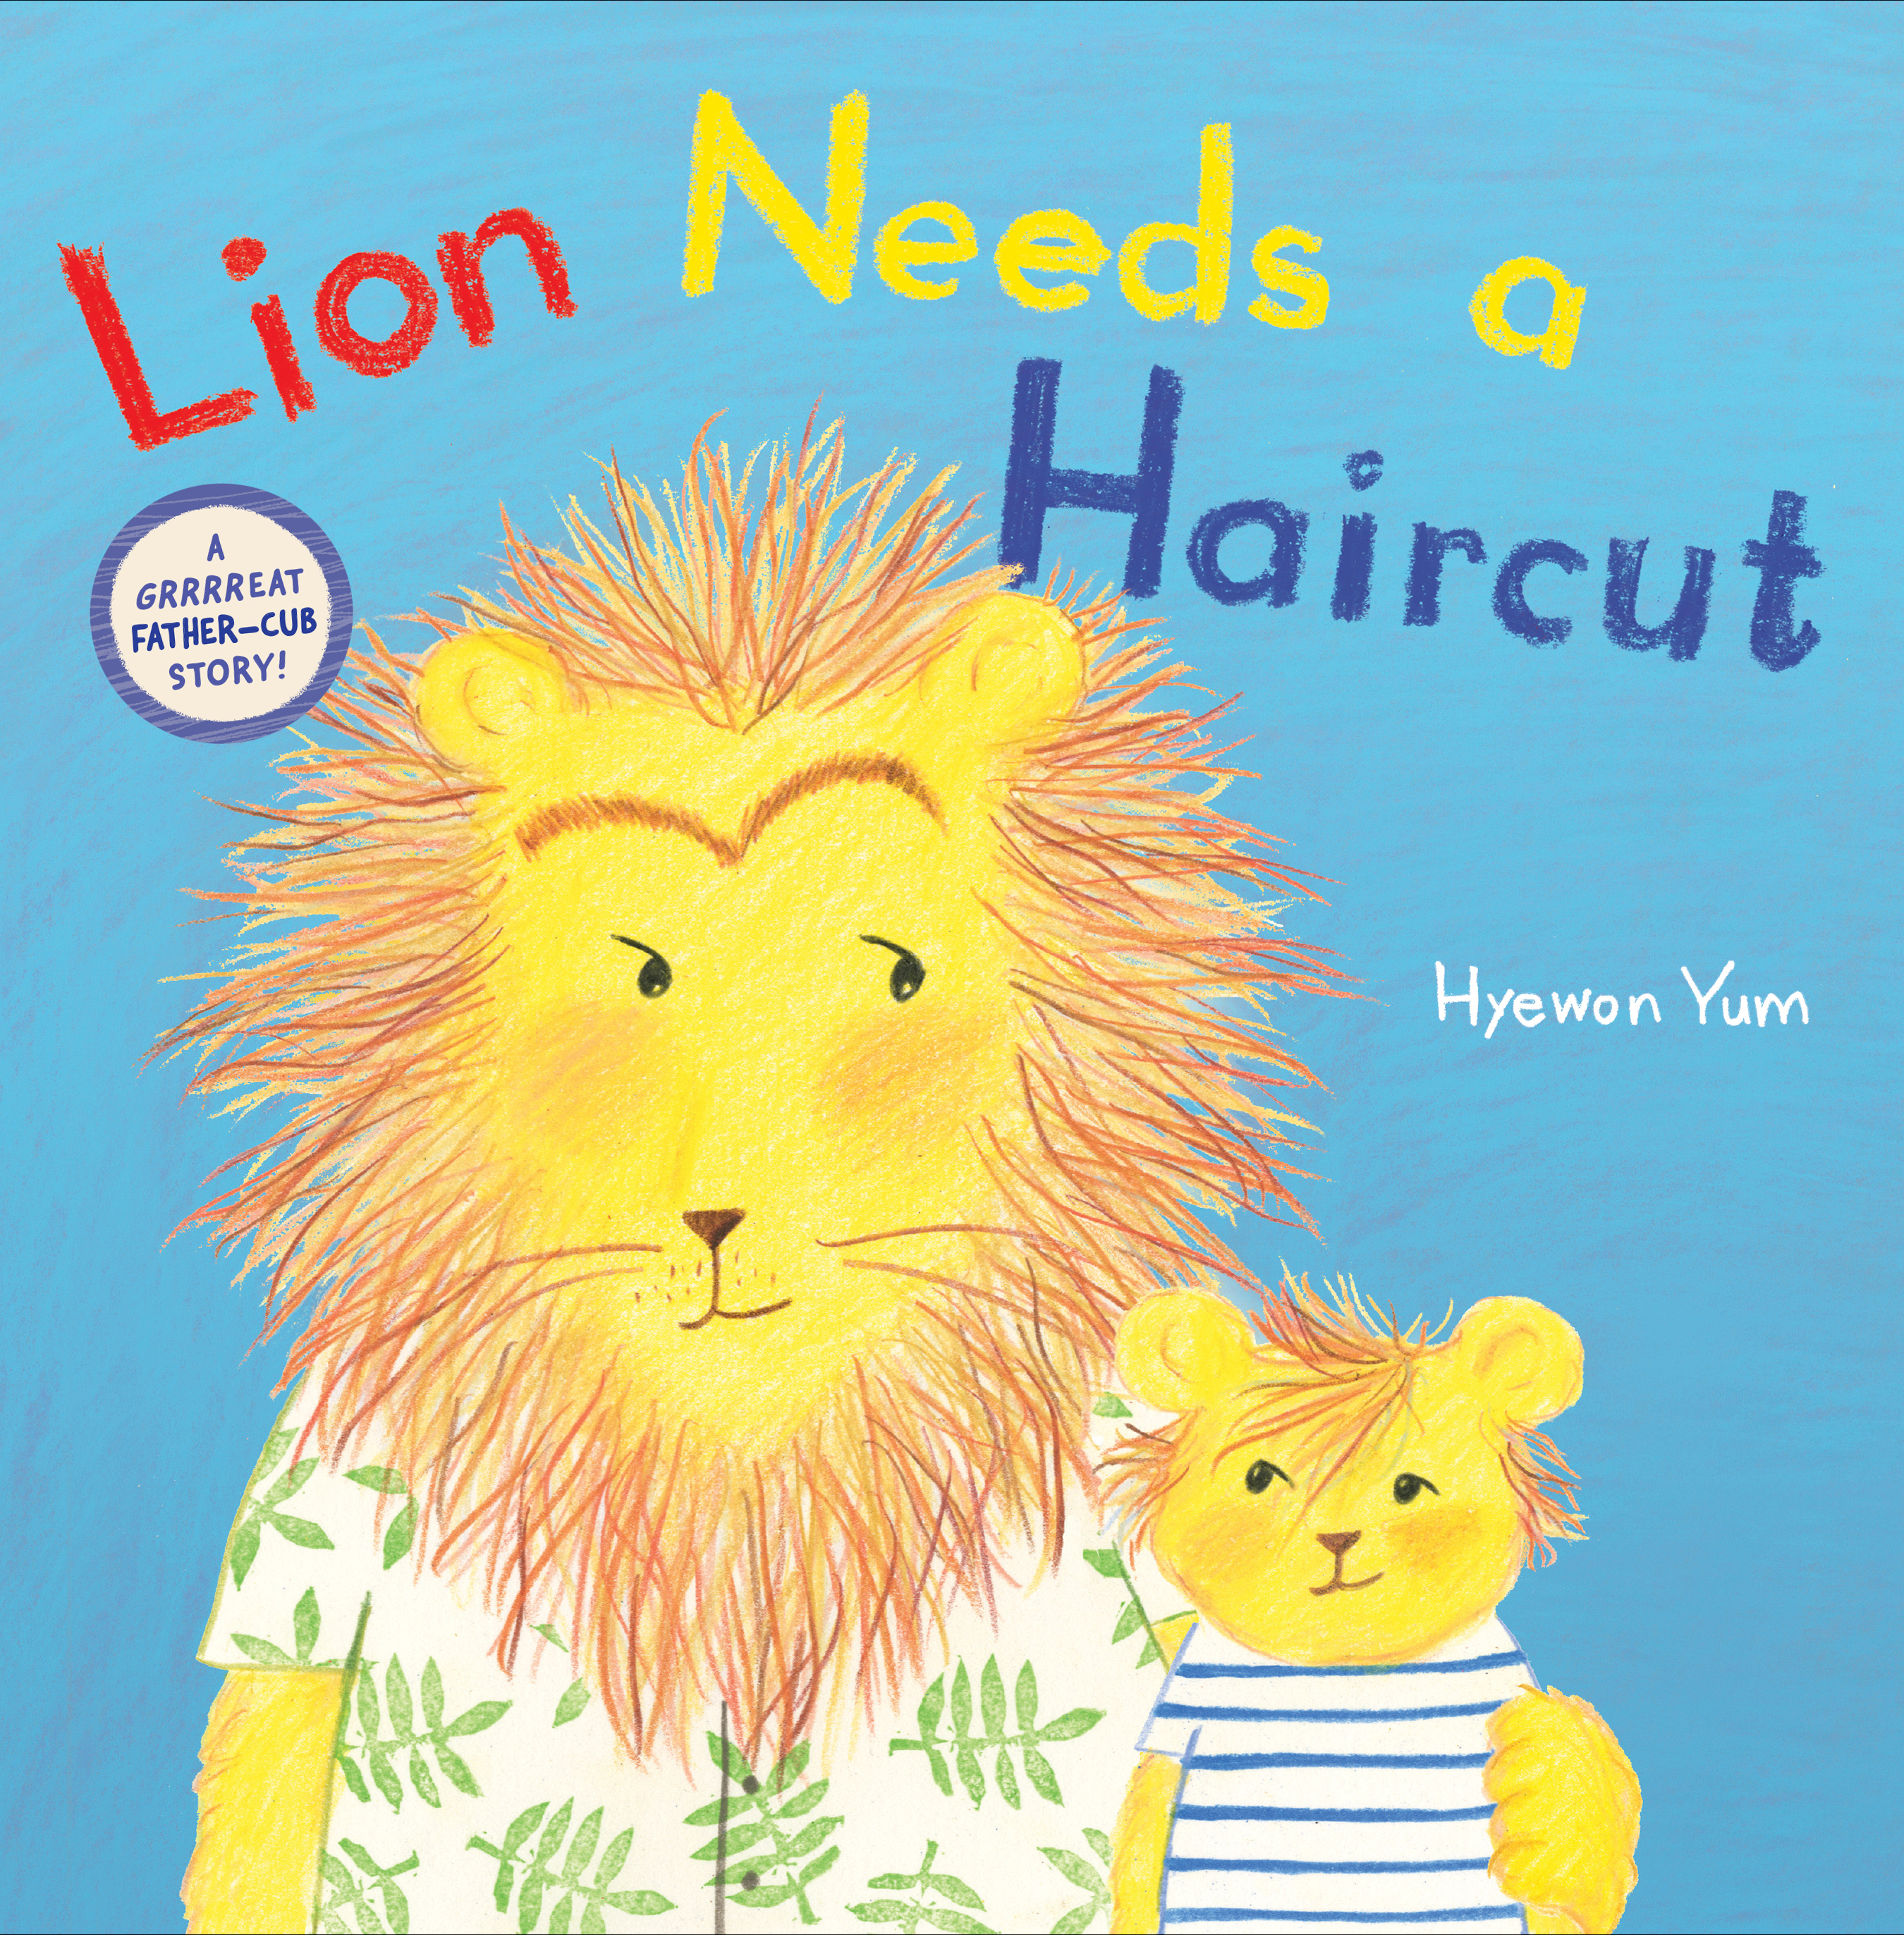 Virtual Sunday Story Time: "Lion Needs a Haircut" by Hyewon Yum